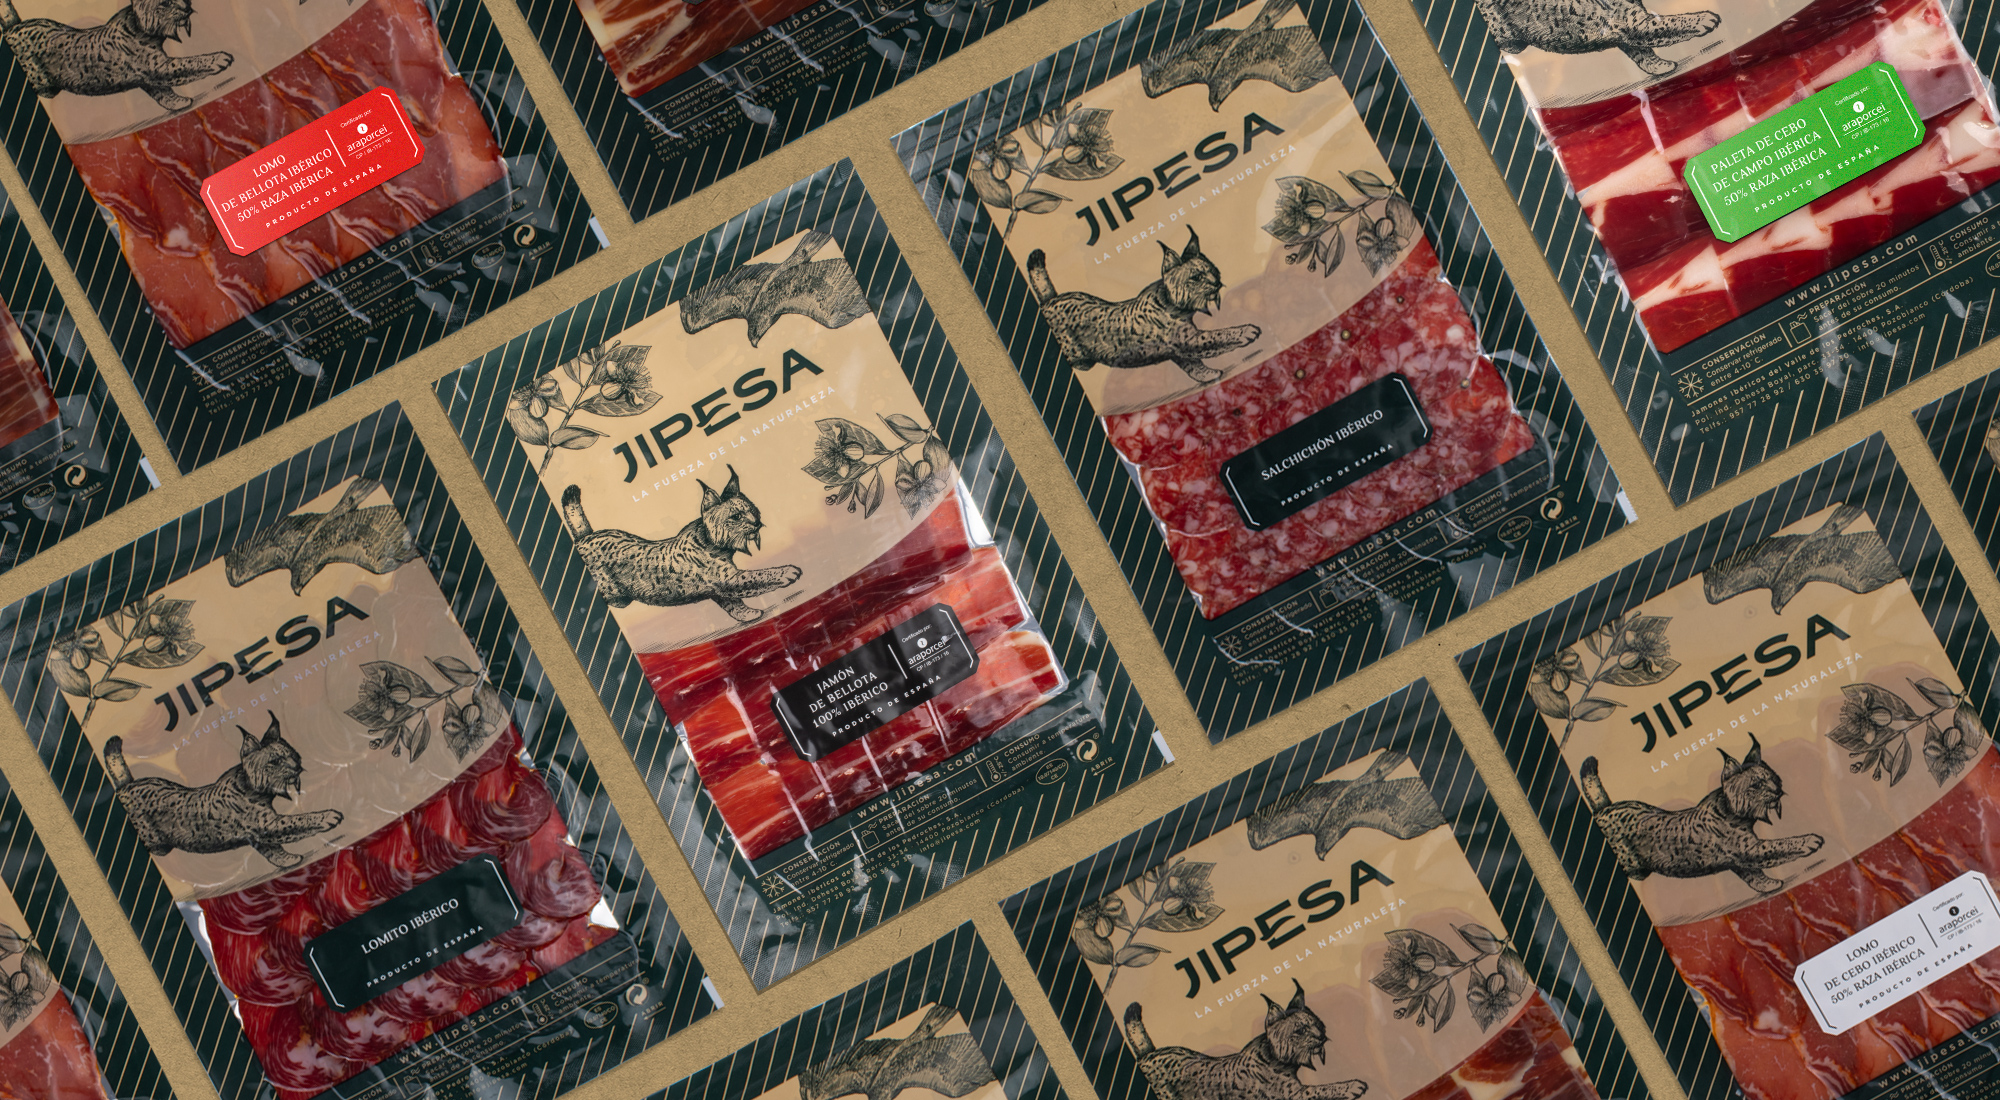 Jipesa Packaging sostenible para jamón